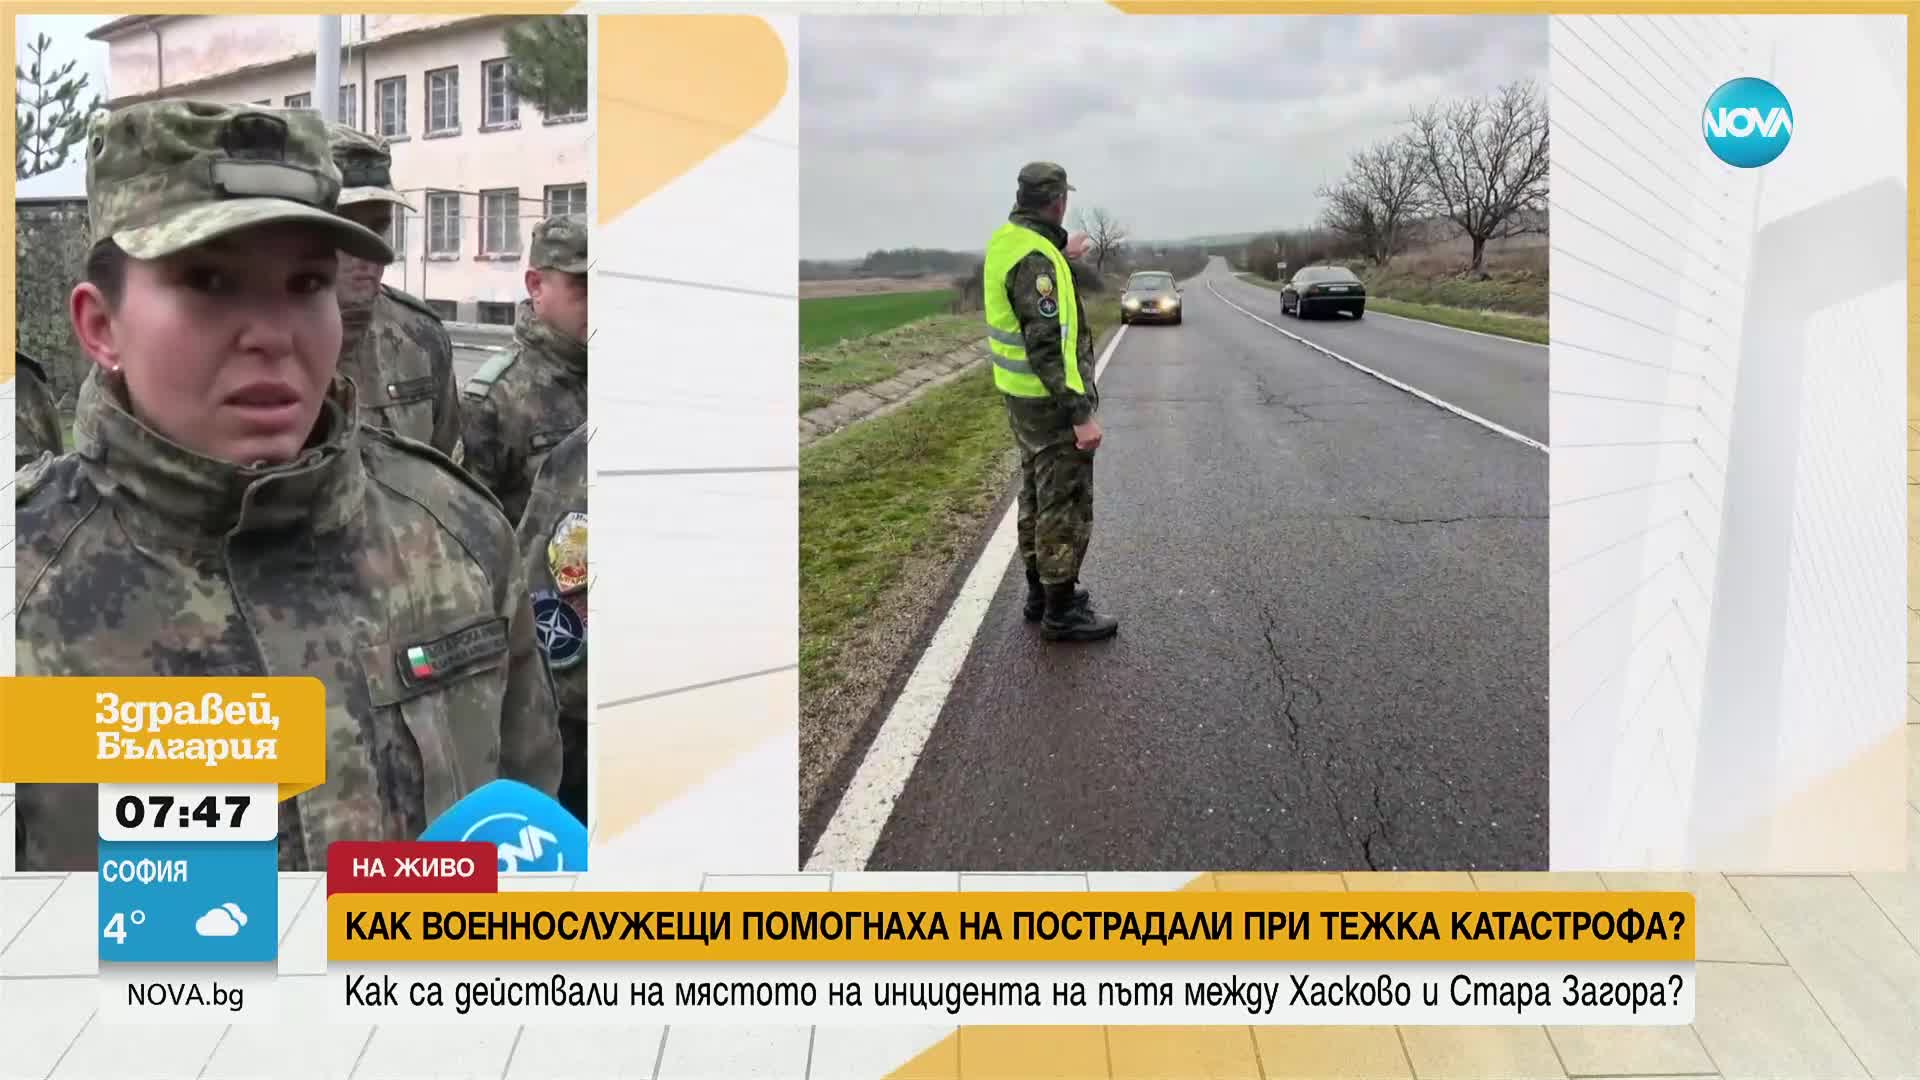 Военни помогнаа на поадалие лед кааоа в Хаковко - Vbox7